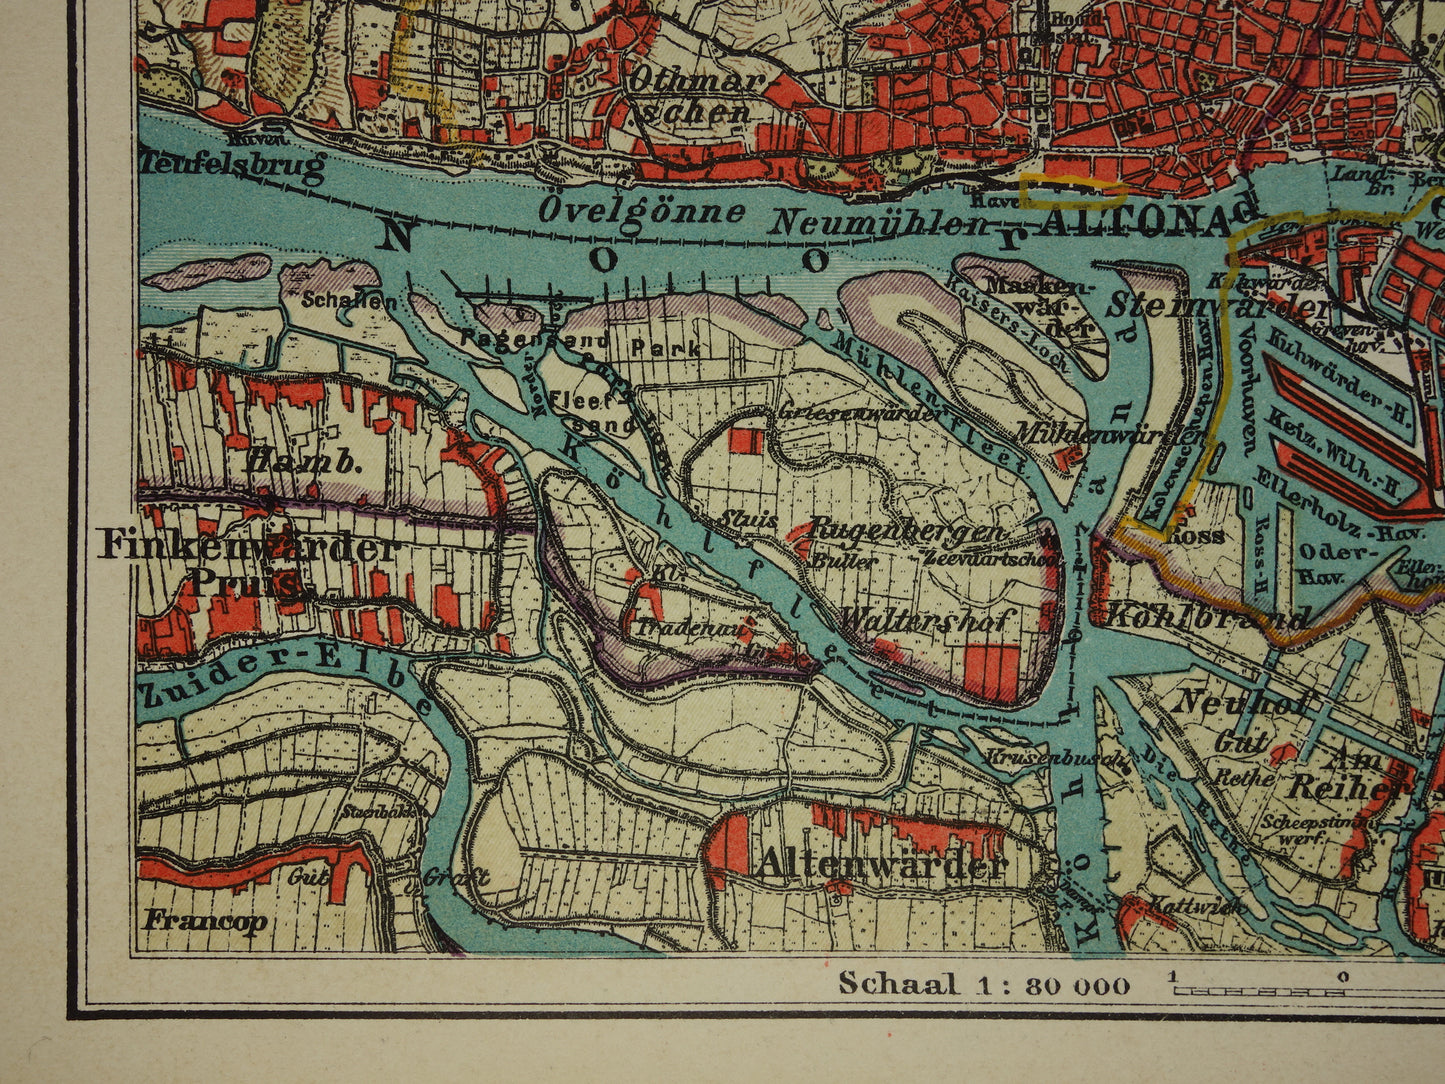 HAMBURG oude kaart van Hamburg Duitsland uit 1908 originele antieke plattegrond vintage landkaart